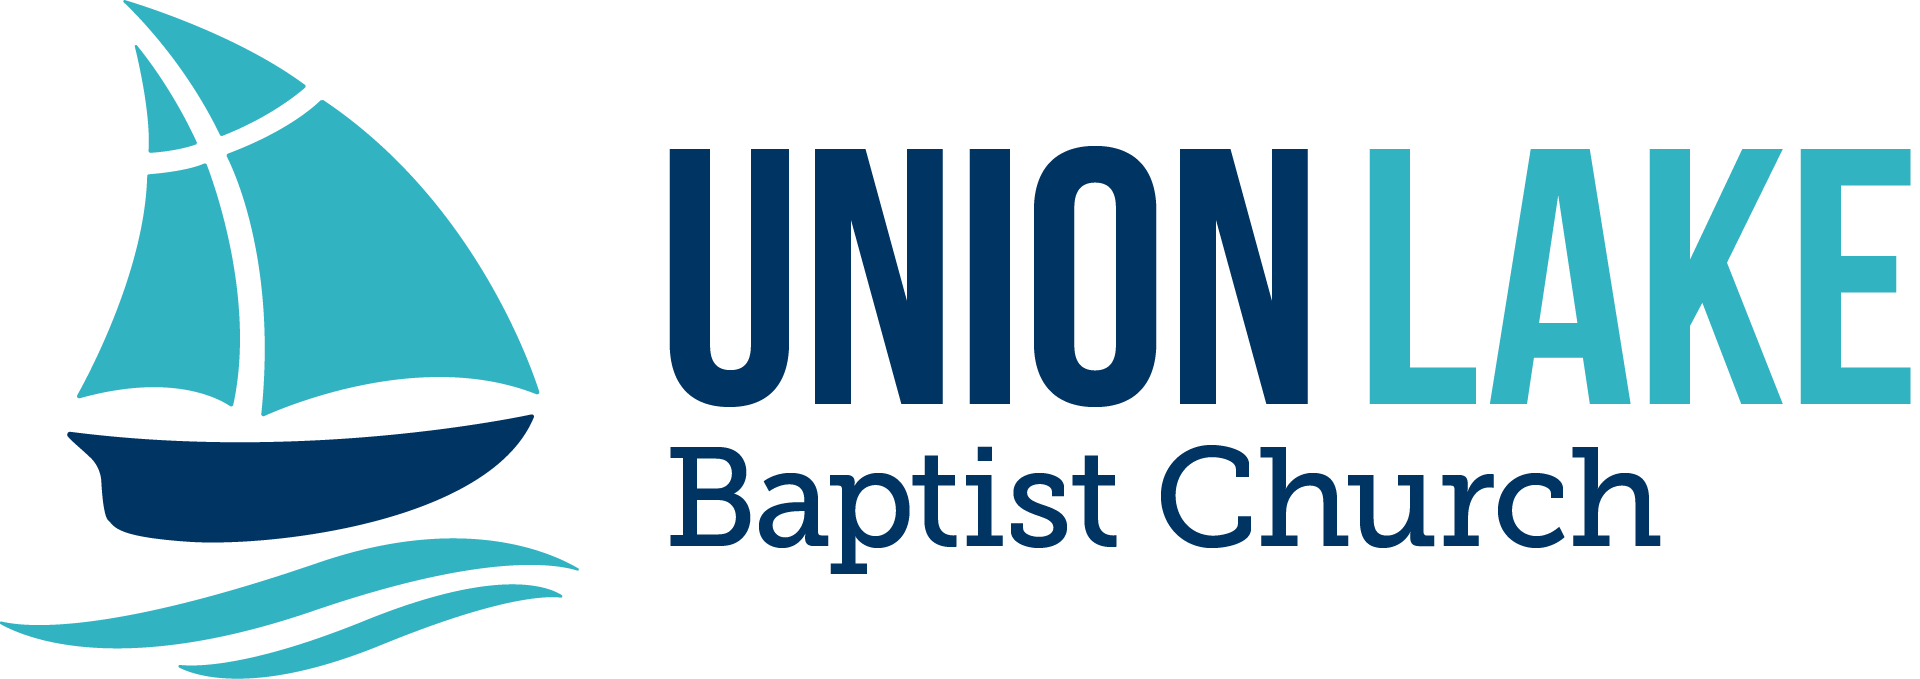 Union Lake Baptist Church